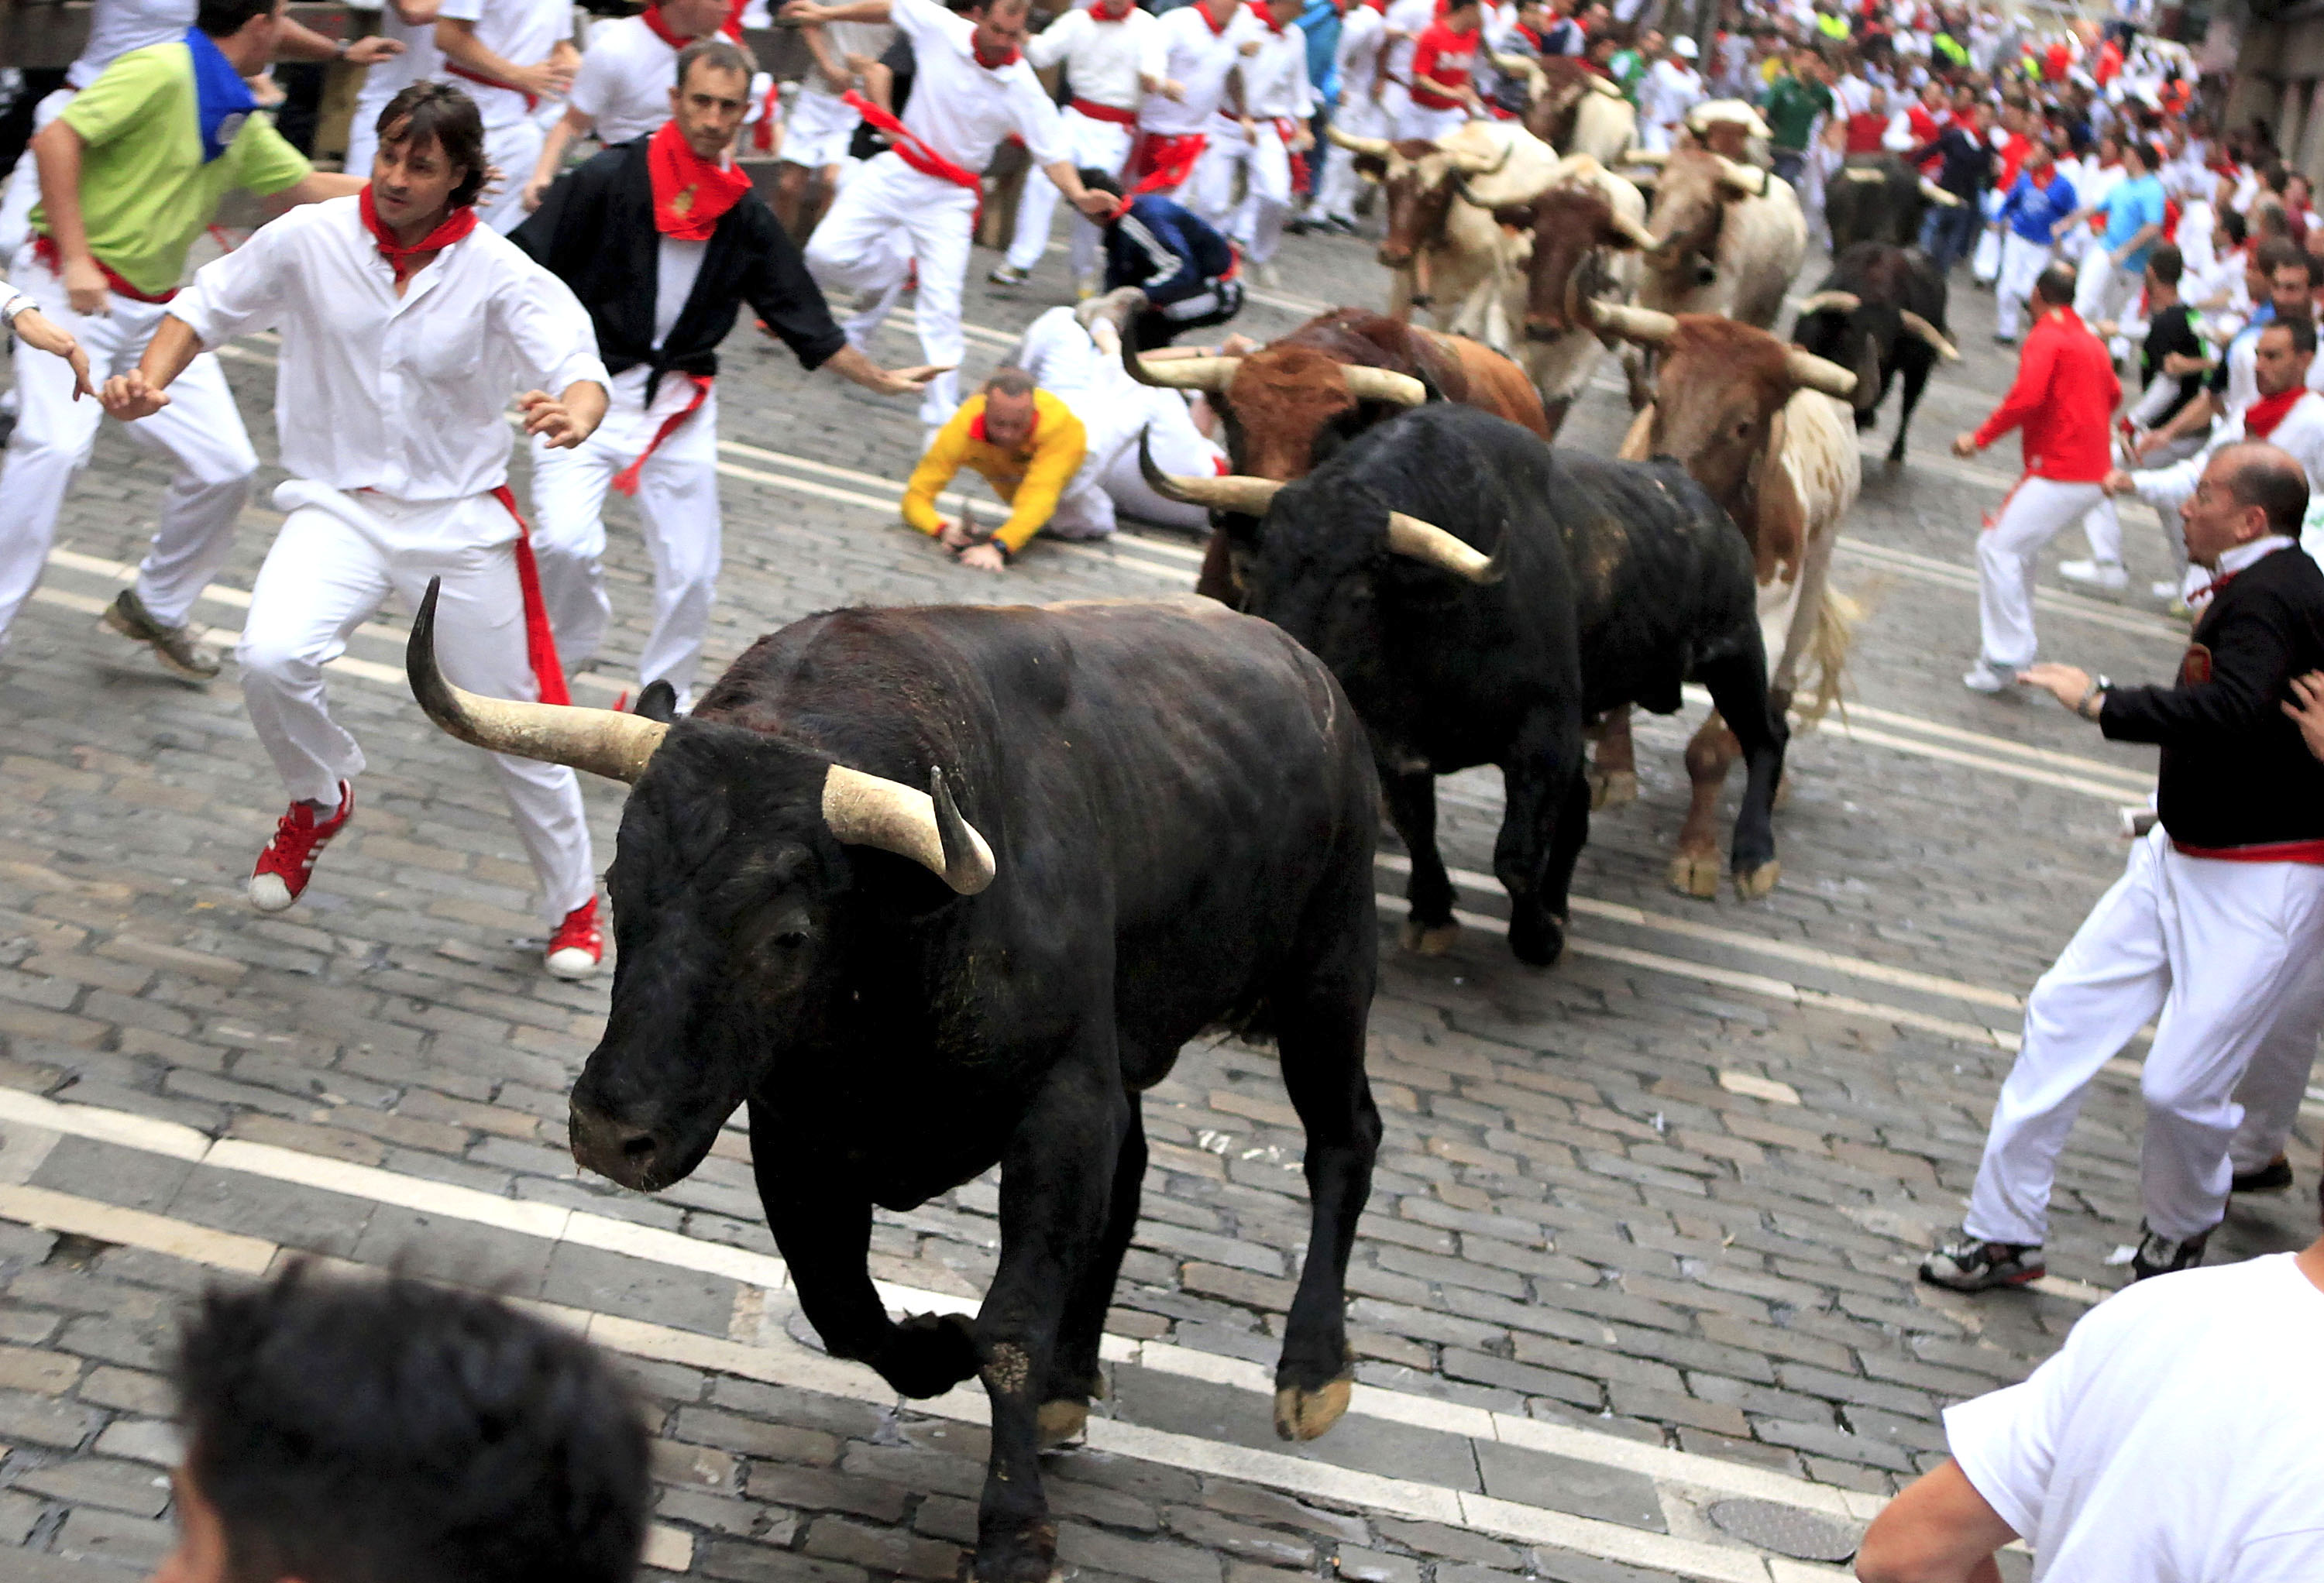 Running-of-the-Bulls-in-Pamplona-spain-travel-trip-to-Running-of-the-Bulls-in-Pamplona.jpg